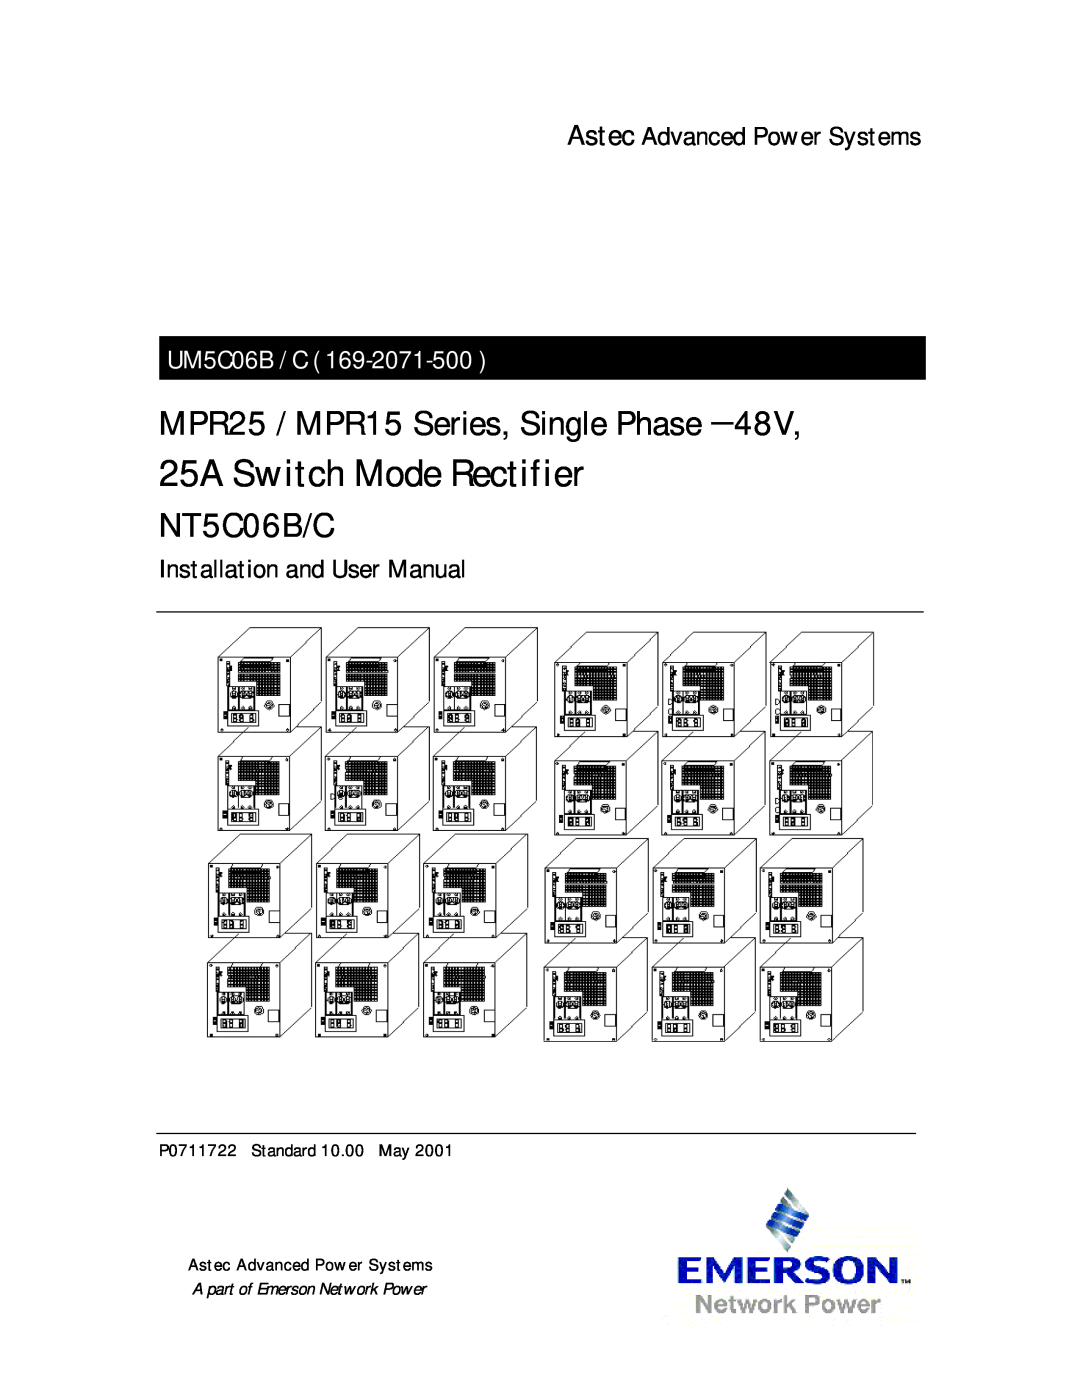 Emerson user manual MPR25 / MPR15 Series, Single Phase, 25A Switch Mode Rectifier, NT5C06B/C, UM5C06B / C 